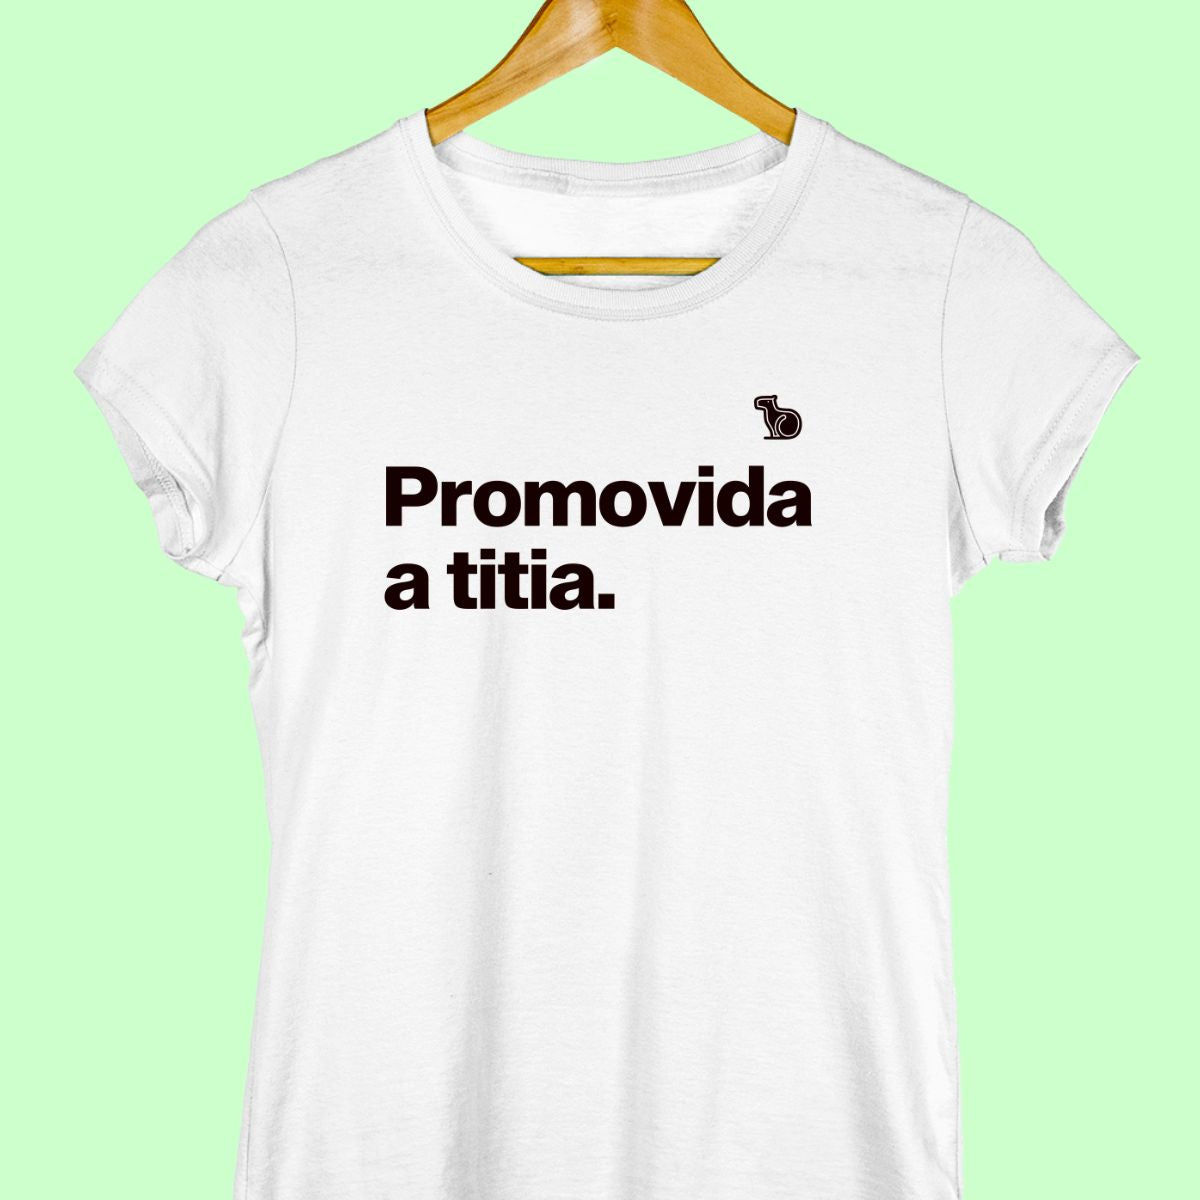 Camiseta com a frase "promovida a titia" feminina branca.